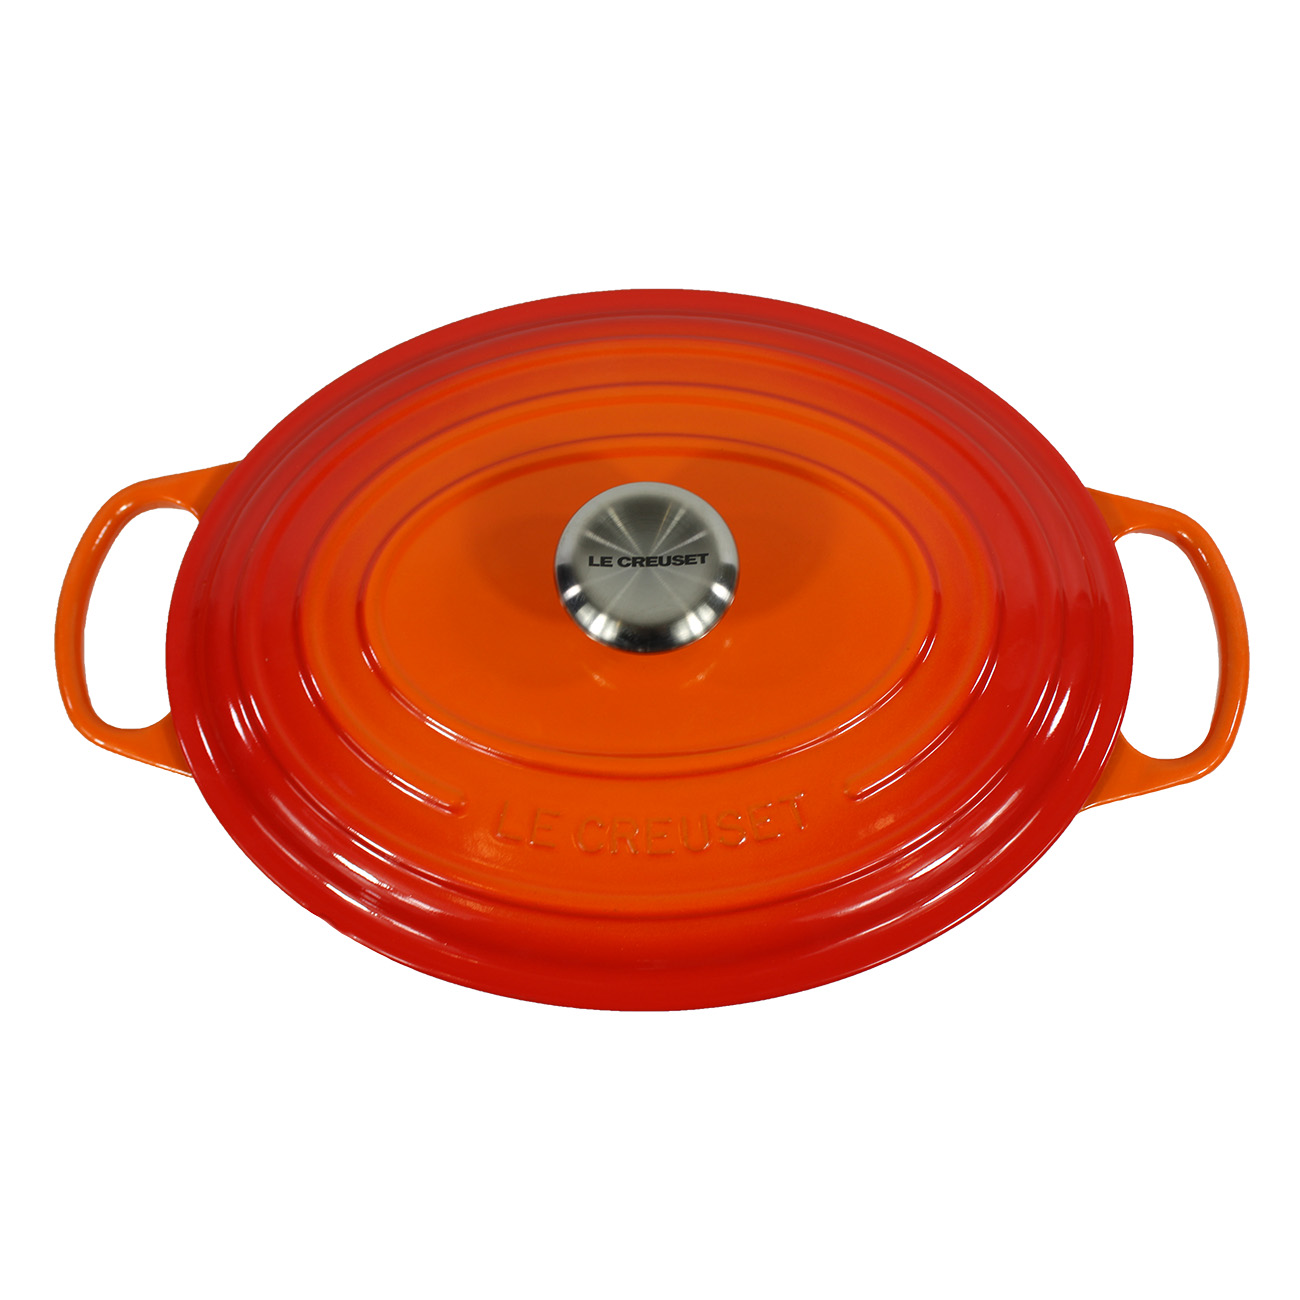 LE CREUSET Bräter cm-orange Topf (Metall) 31 oval